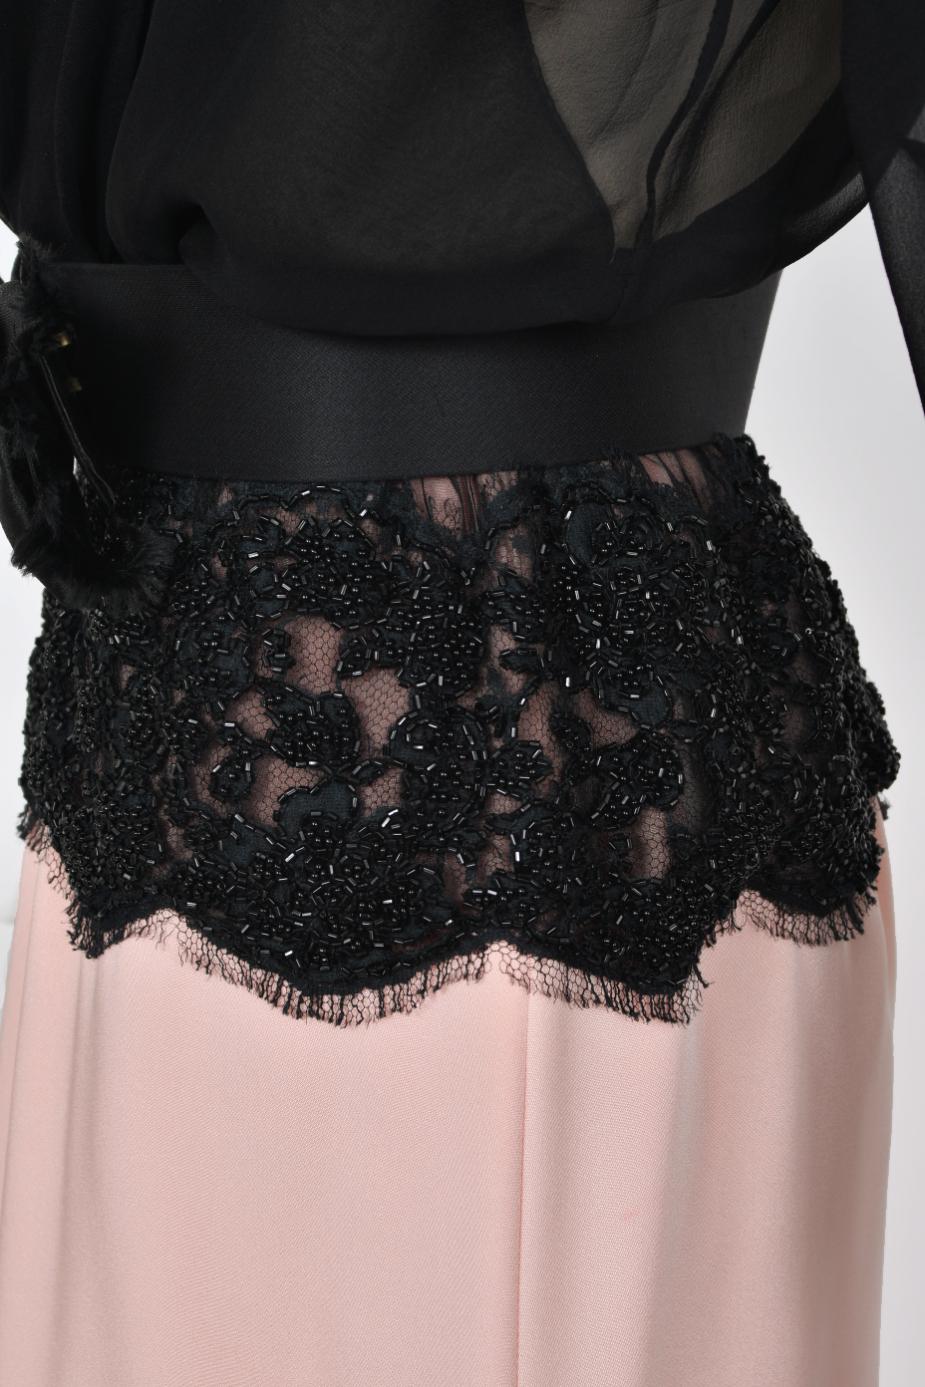 1986 Oscar de la Renta Documented Runway Black Sheer Chiffon & Pink Silk Gown For Sale 3